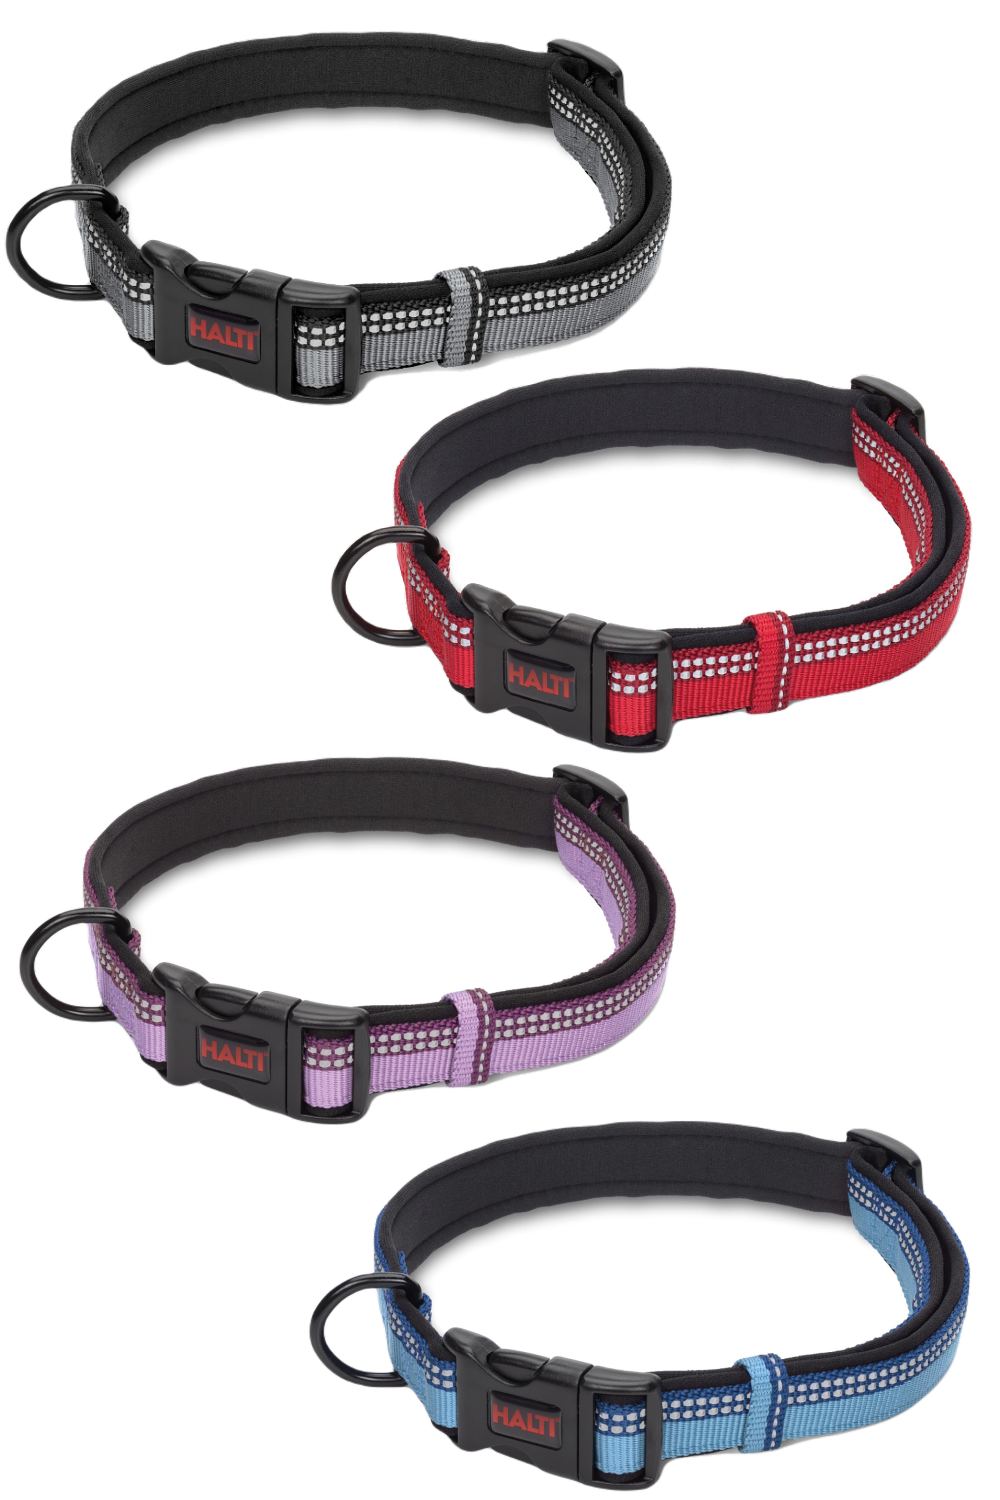 Halti Comfort Collar in Black, Red, Purple and Blue